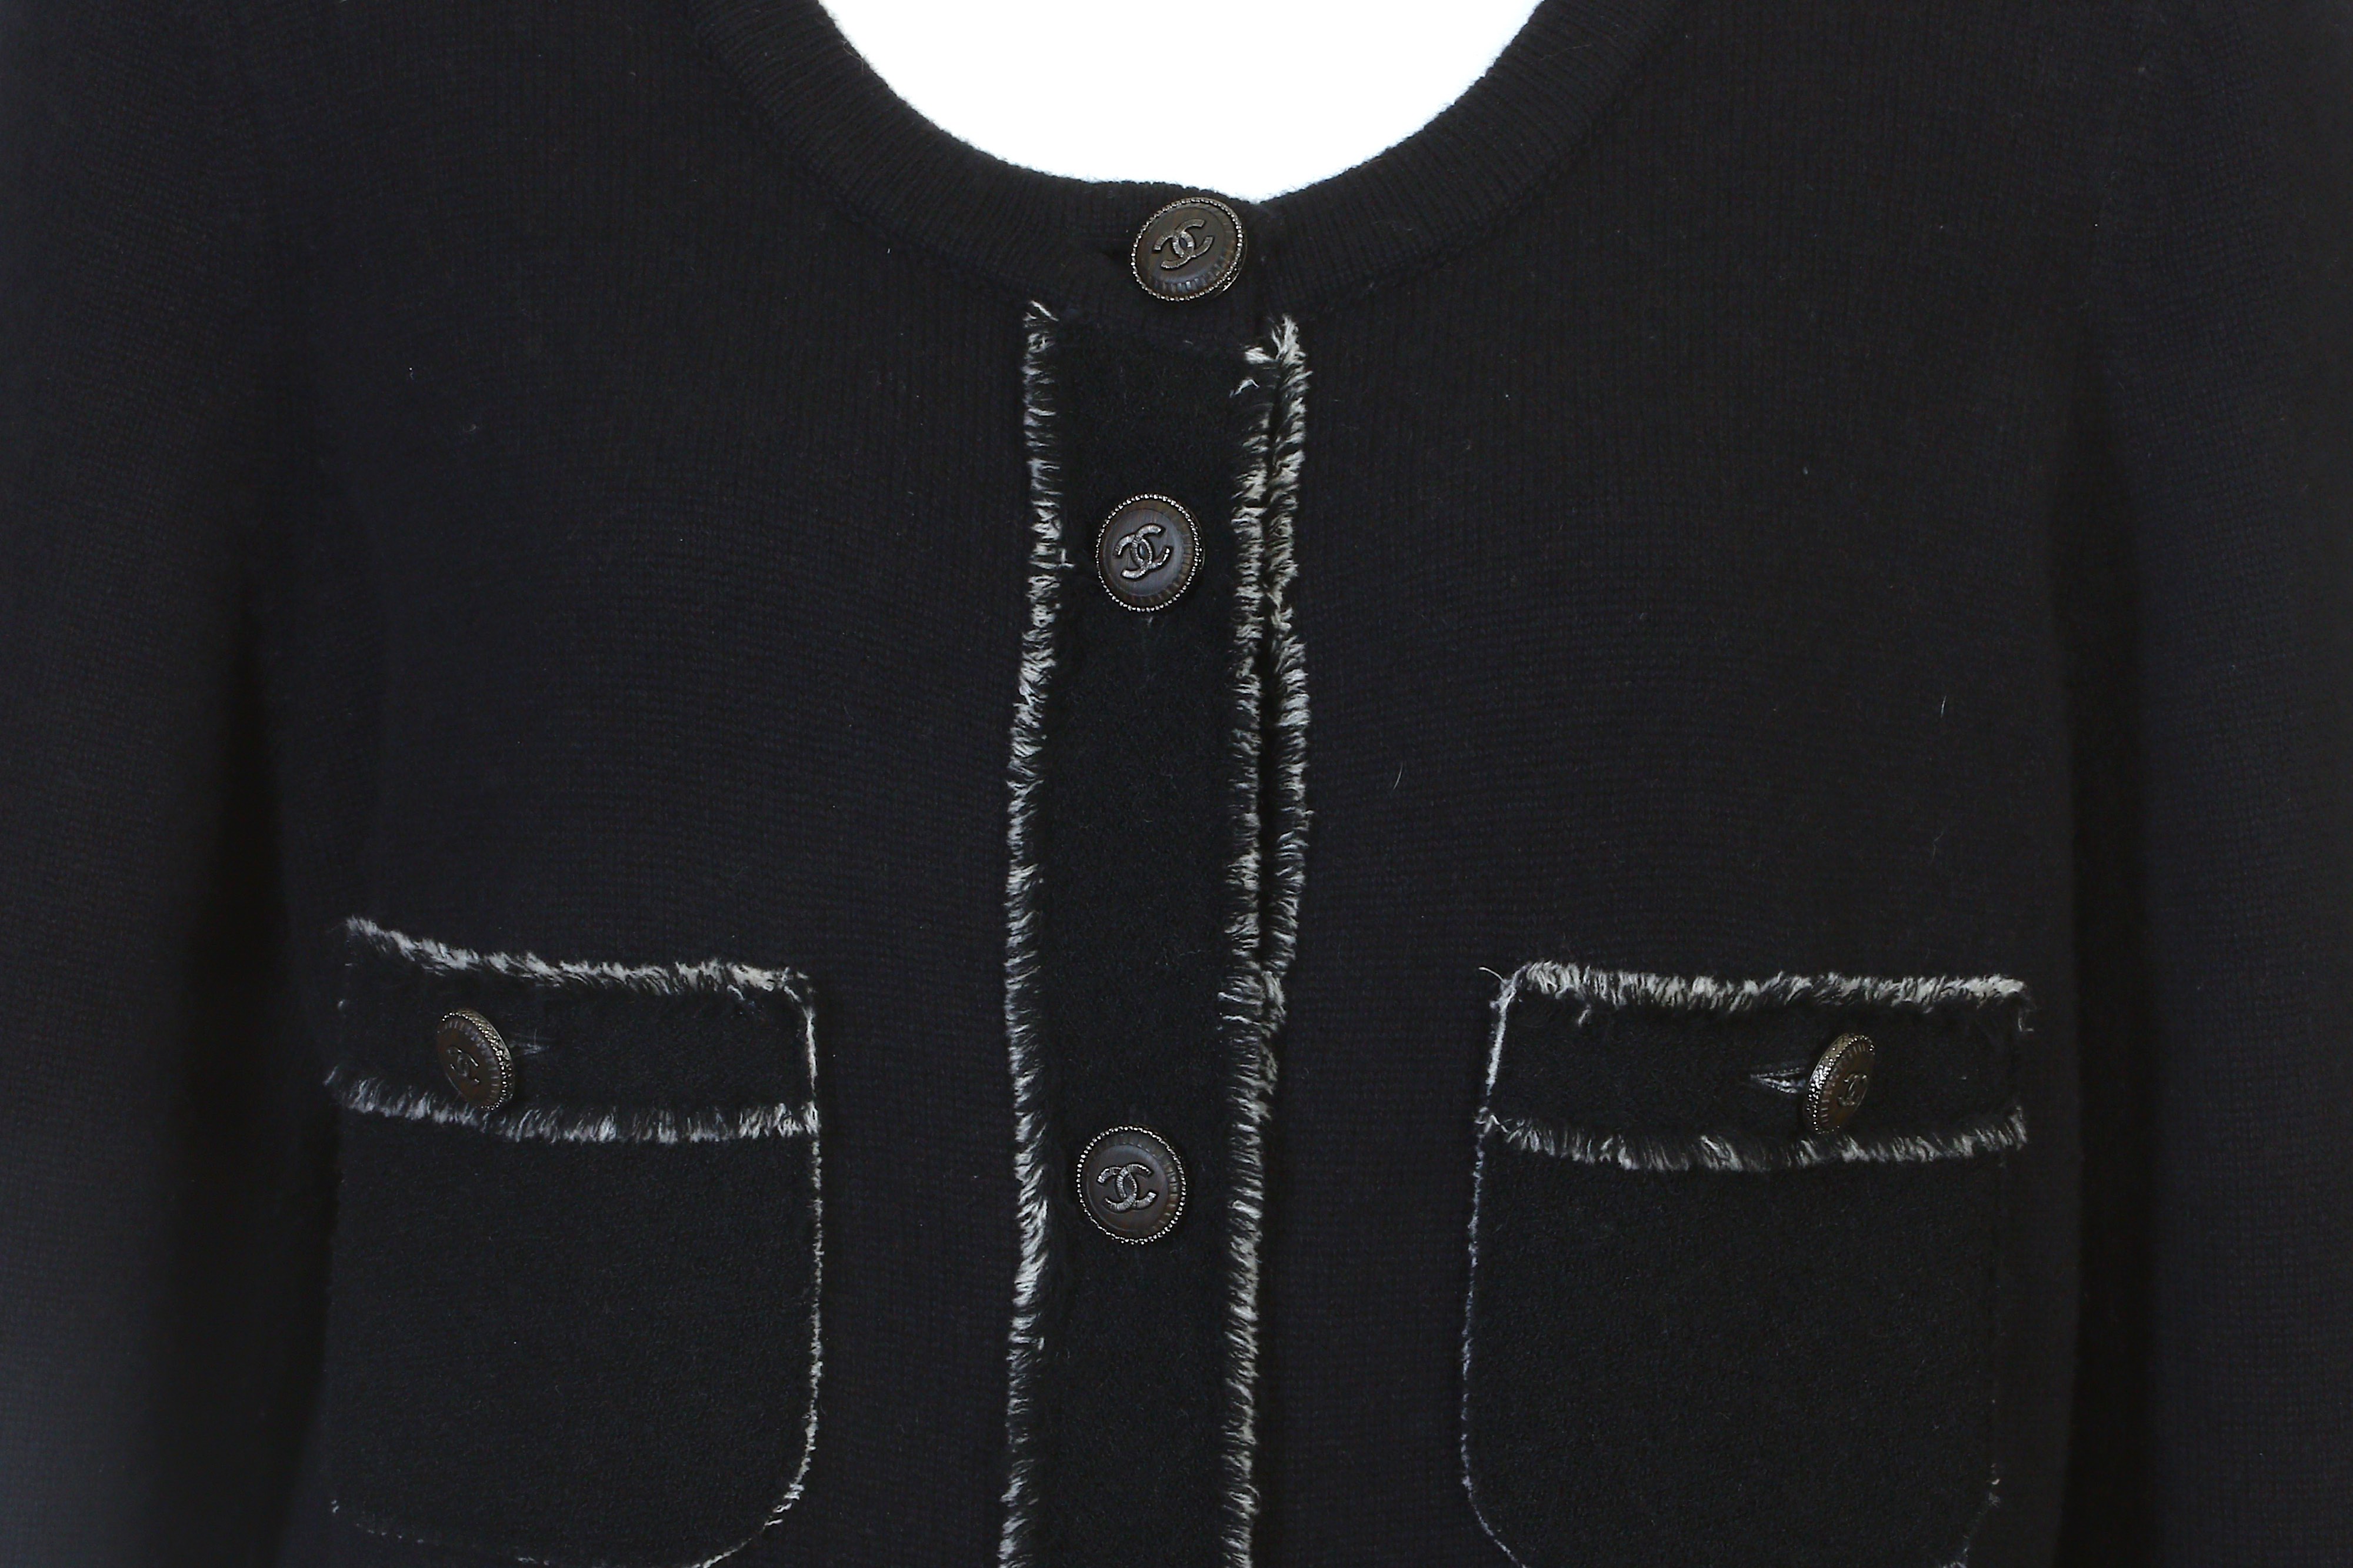 Chanel Black Cashmere Cardigan - Image 7 of 7